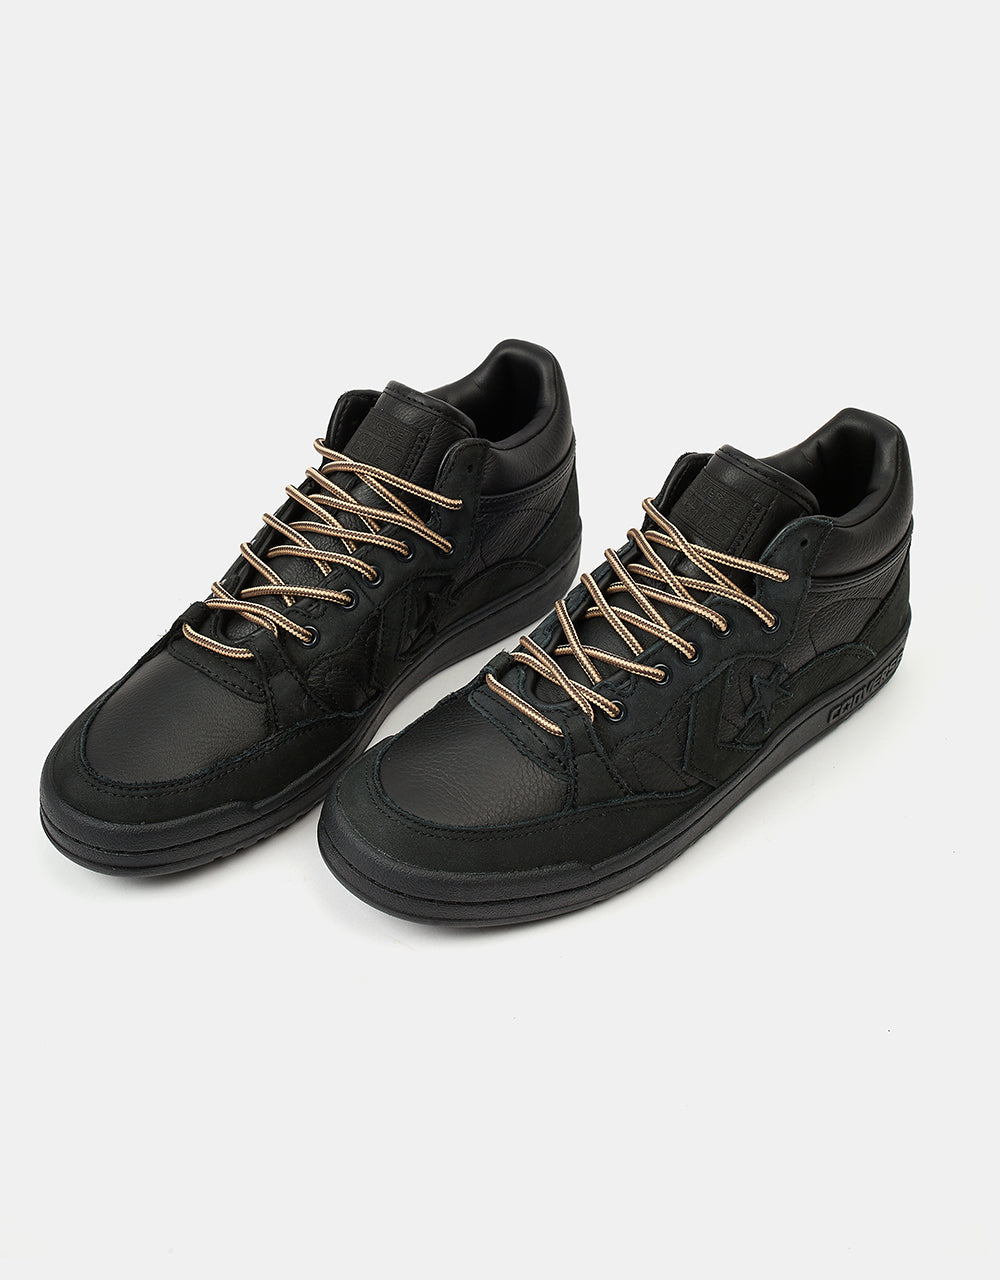 Converse x Alltimers Fastbreak Pro Skate Shoes - Black/Black/Black